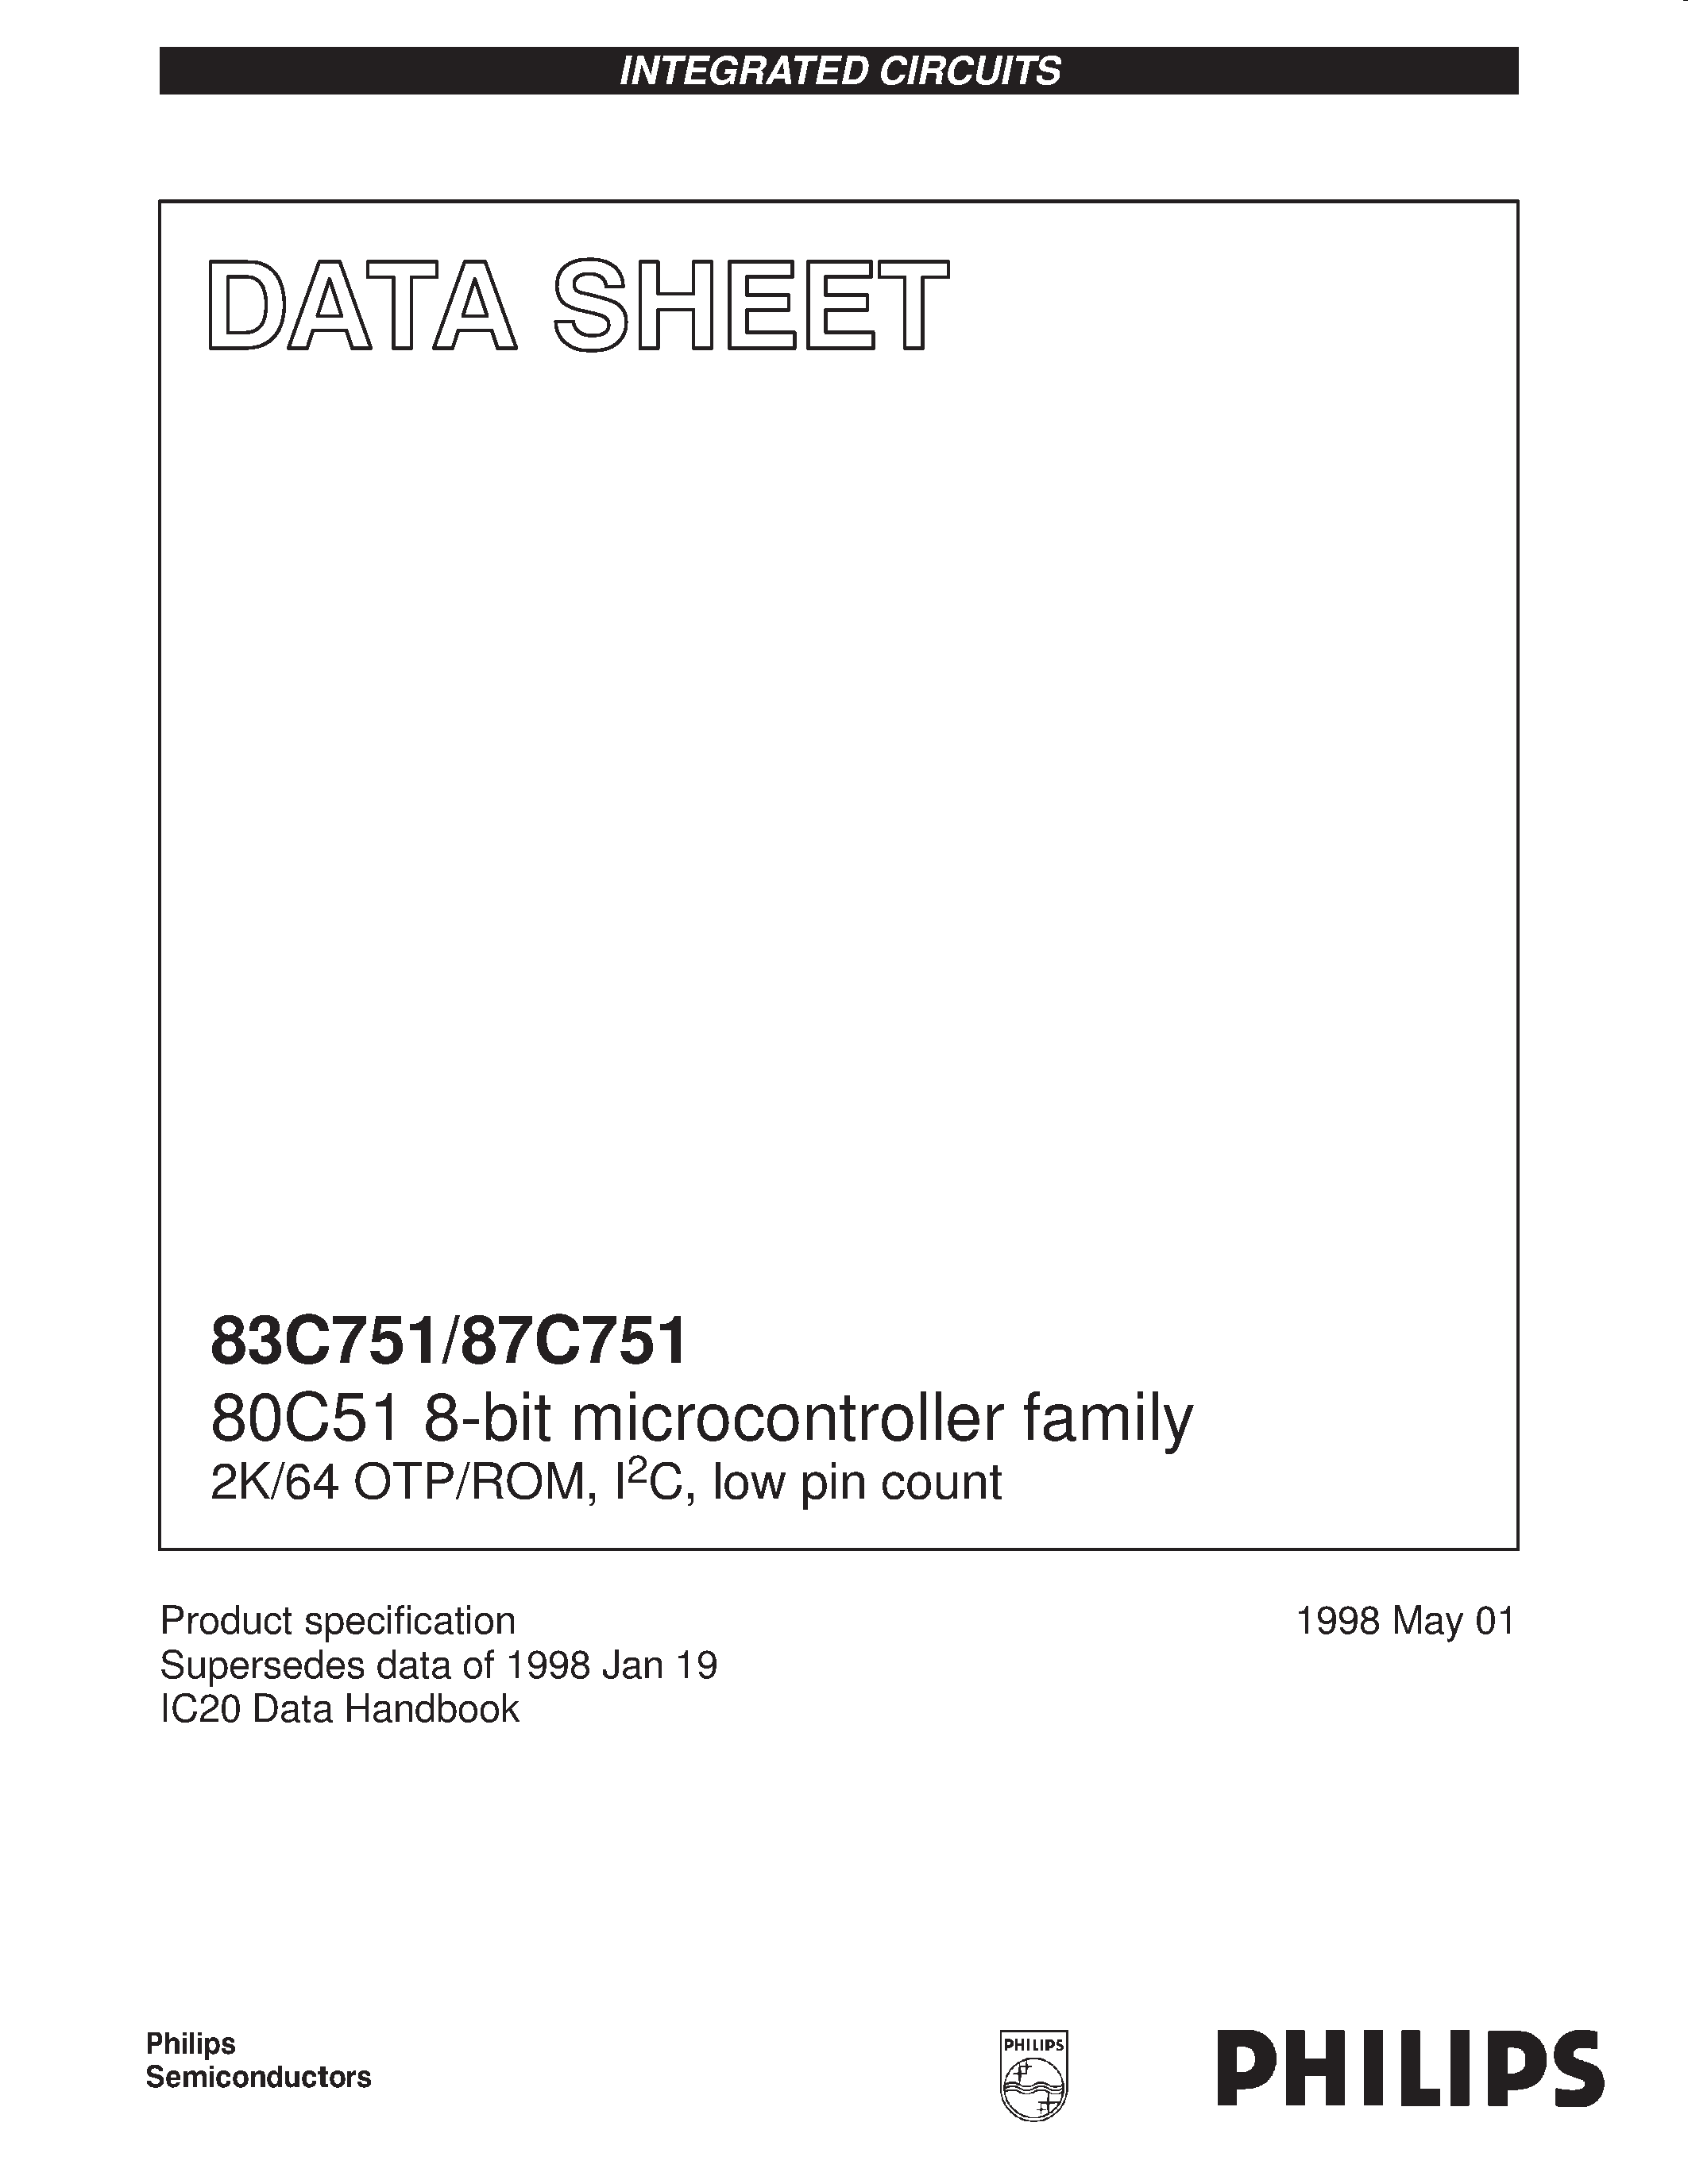 Даташит S87C751-1N24 - 80C51 8-bit microcontroller family 2K/64 OTP/ROM / I2C / low pin count страница 1